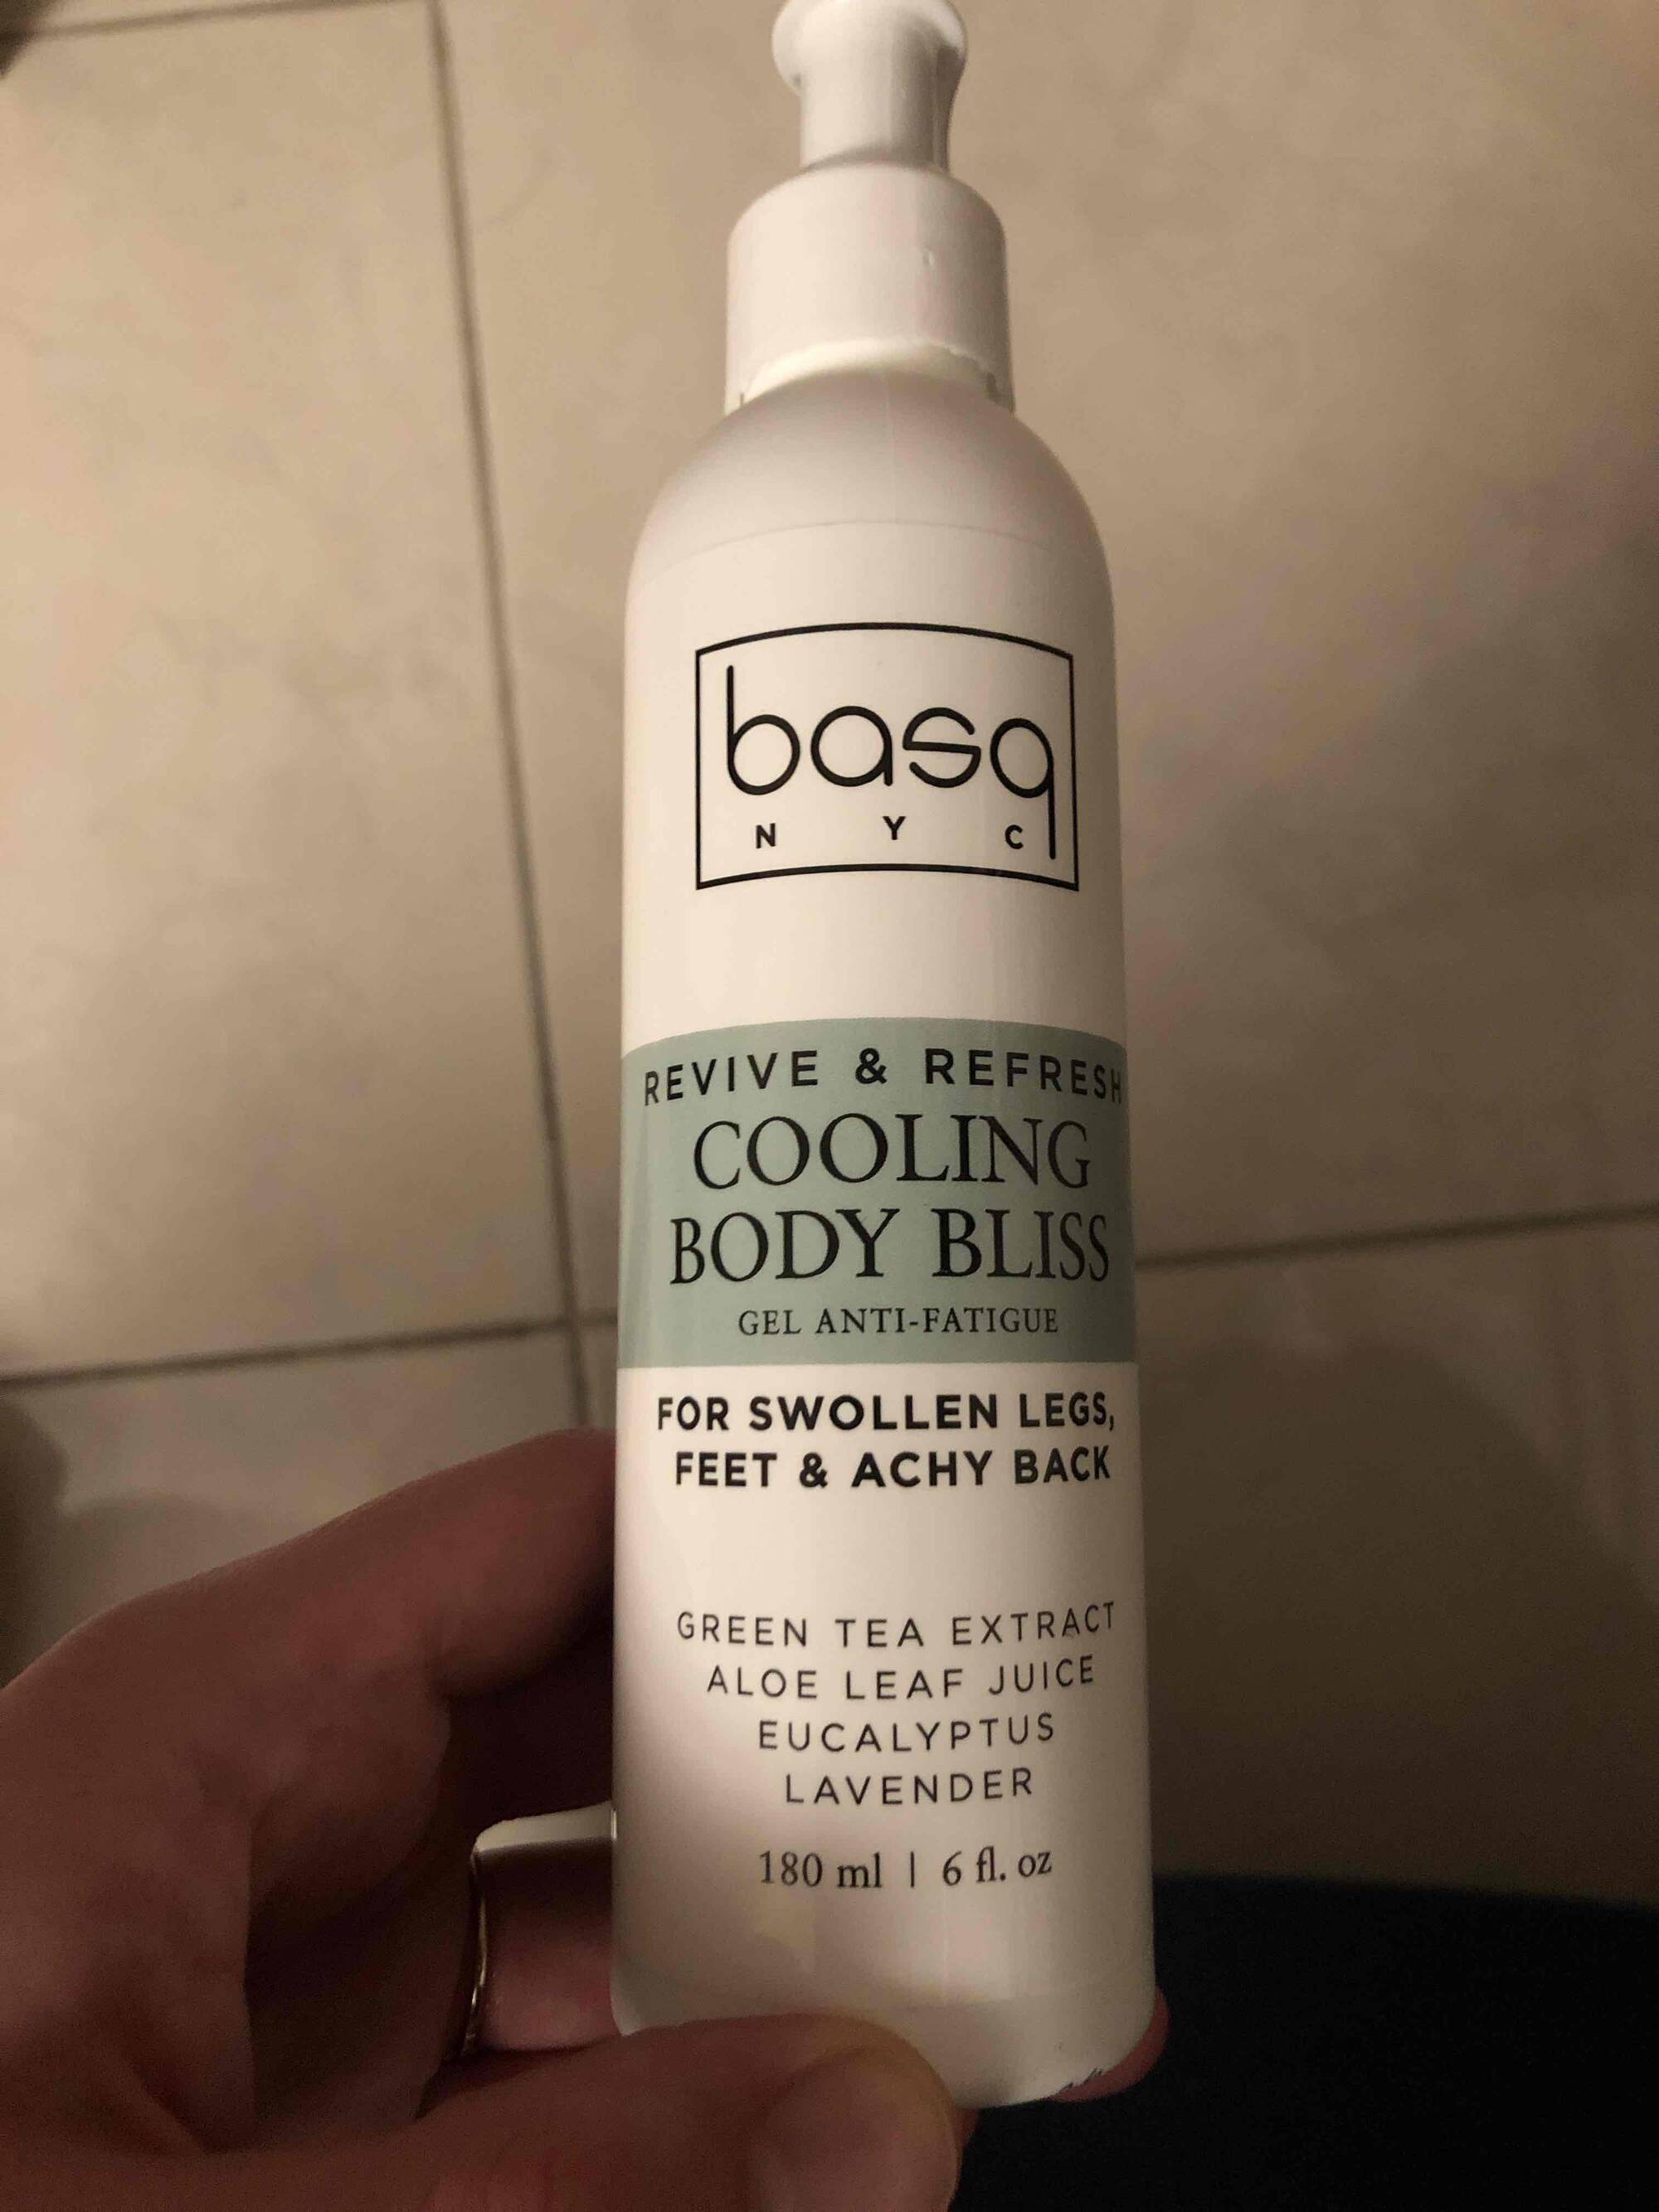 Cooling Body Bliss – basq NYC